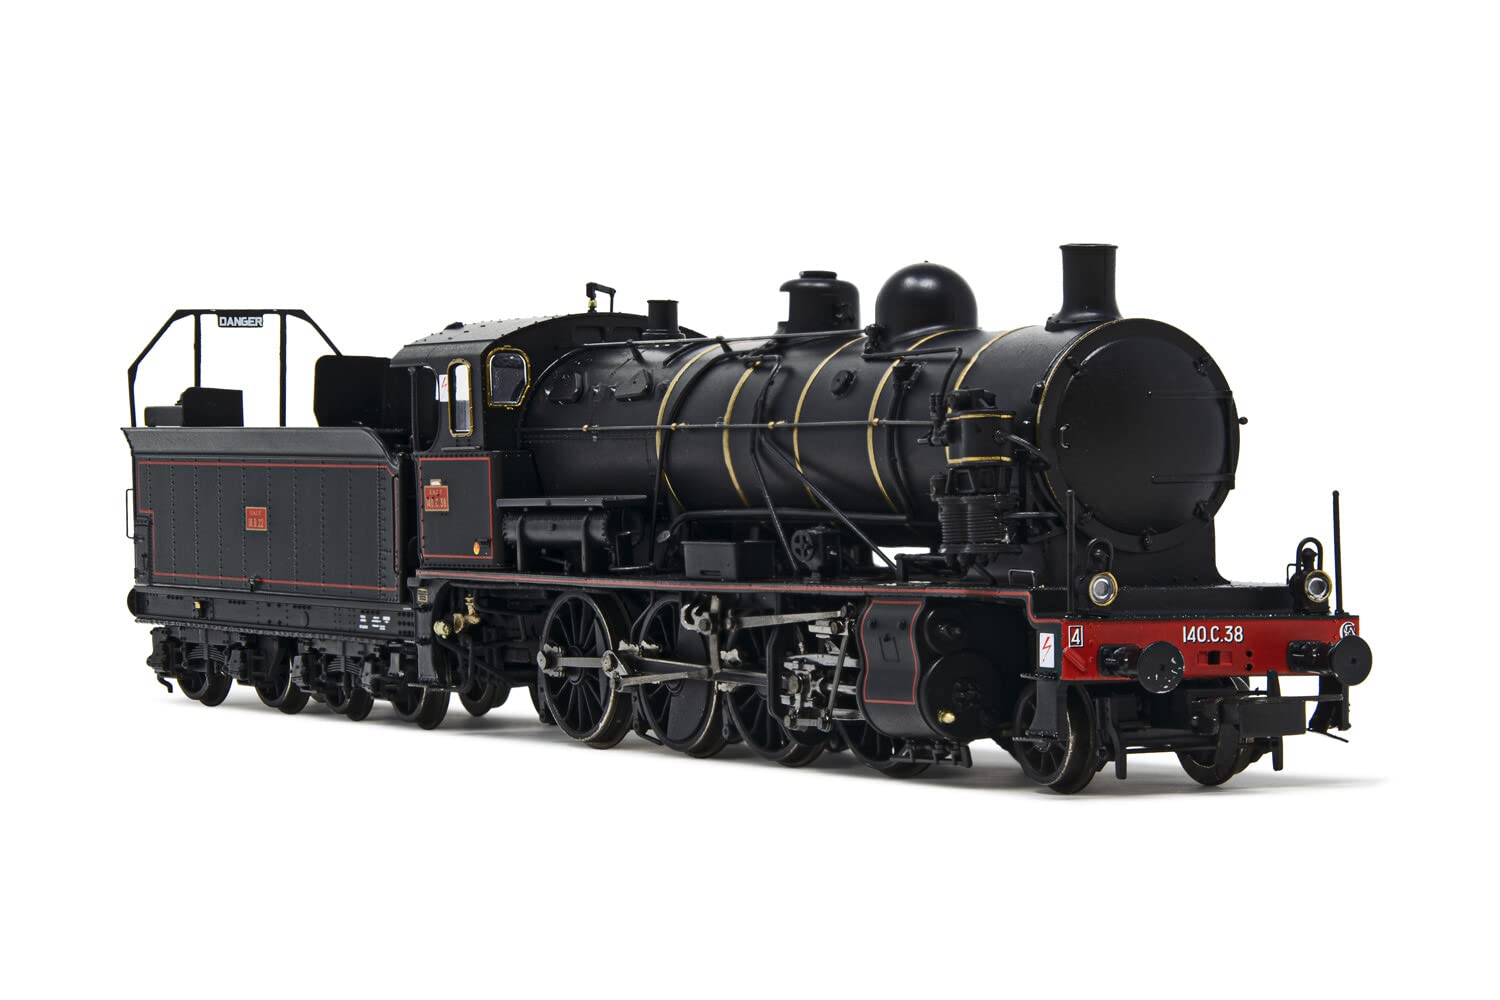 JOUEF - SNCF, 140 C 38, Tender 18 B 22 (Est), schwarz, roter Futter, goldene Kesselringe